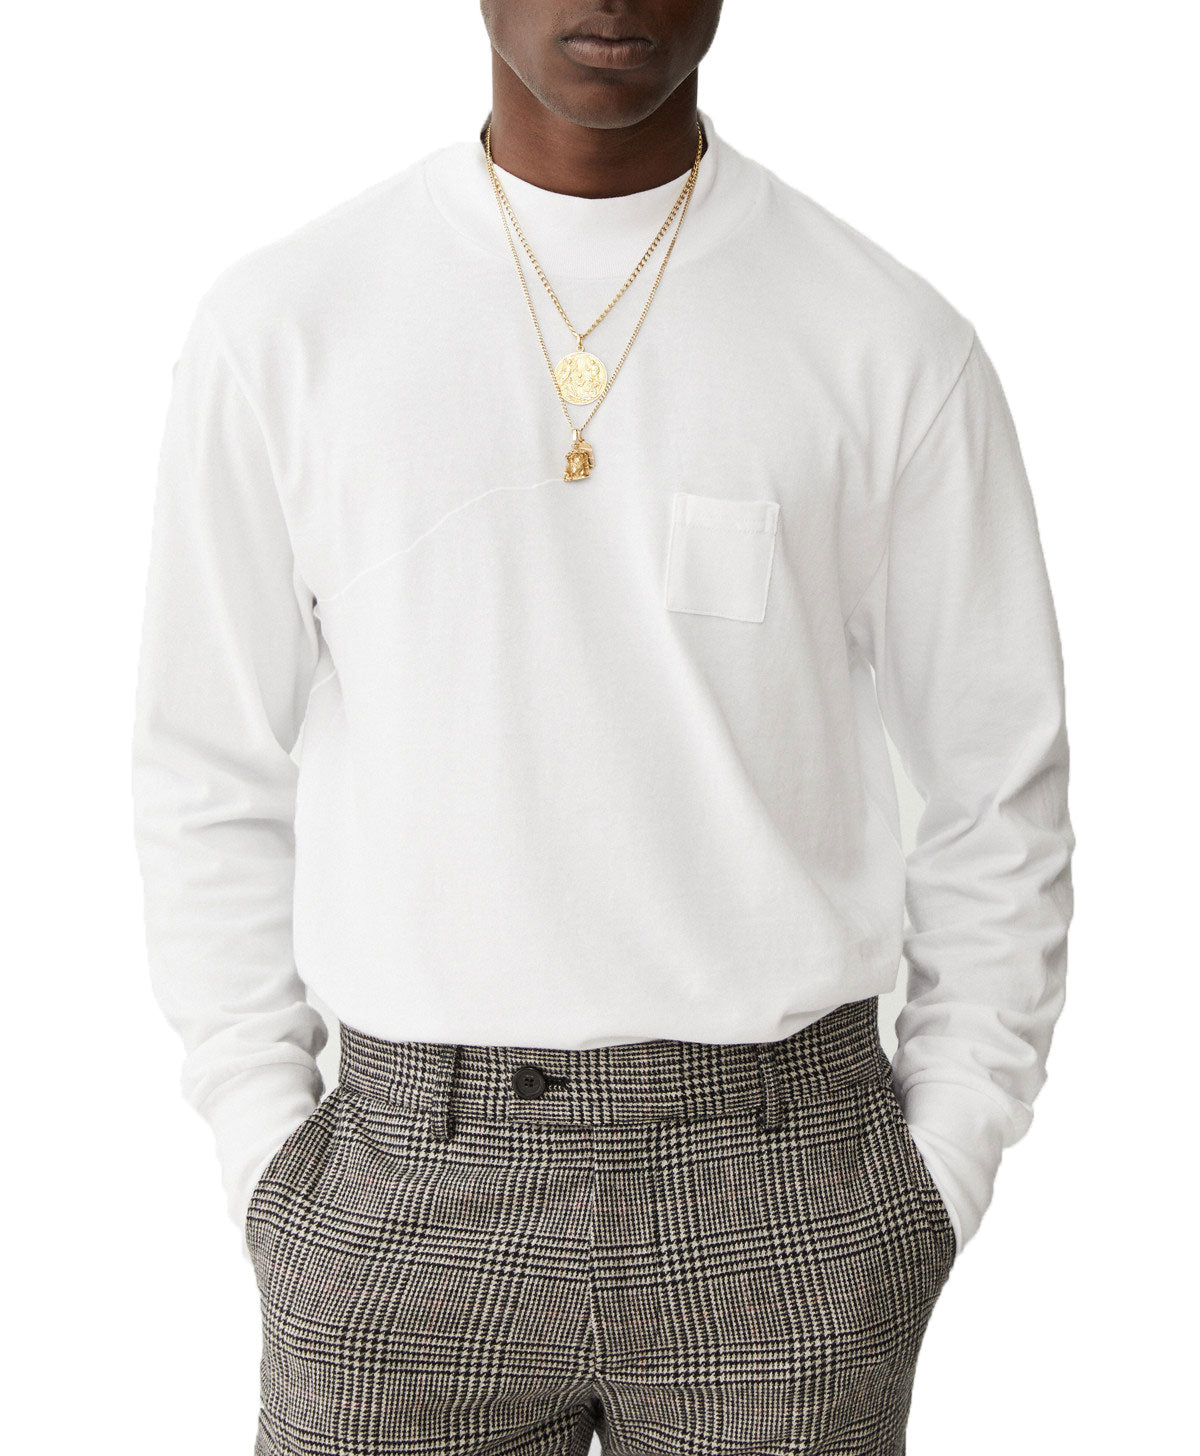 AIME LEON DORE Men's White Dimebag Long Sleeve T-Shirt Size X